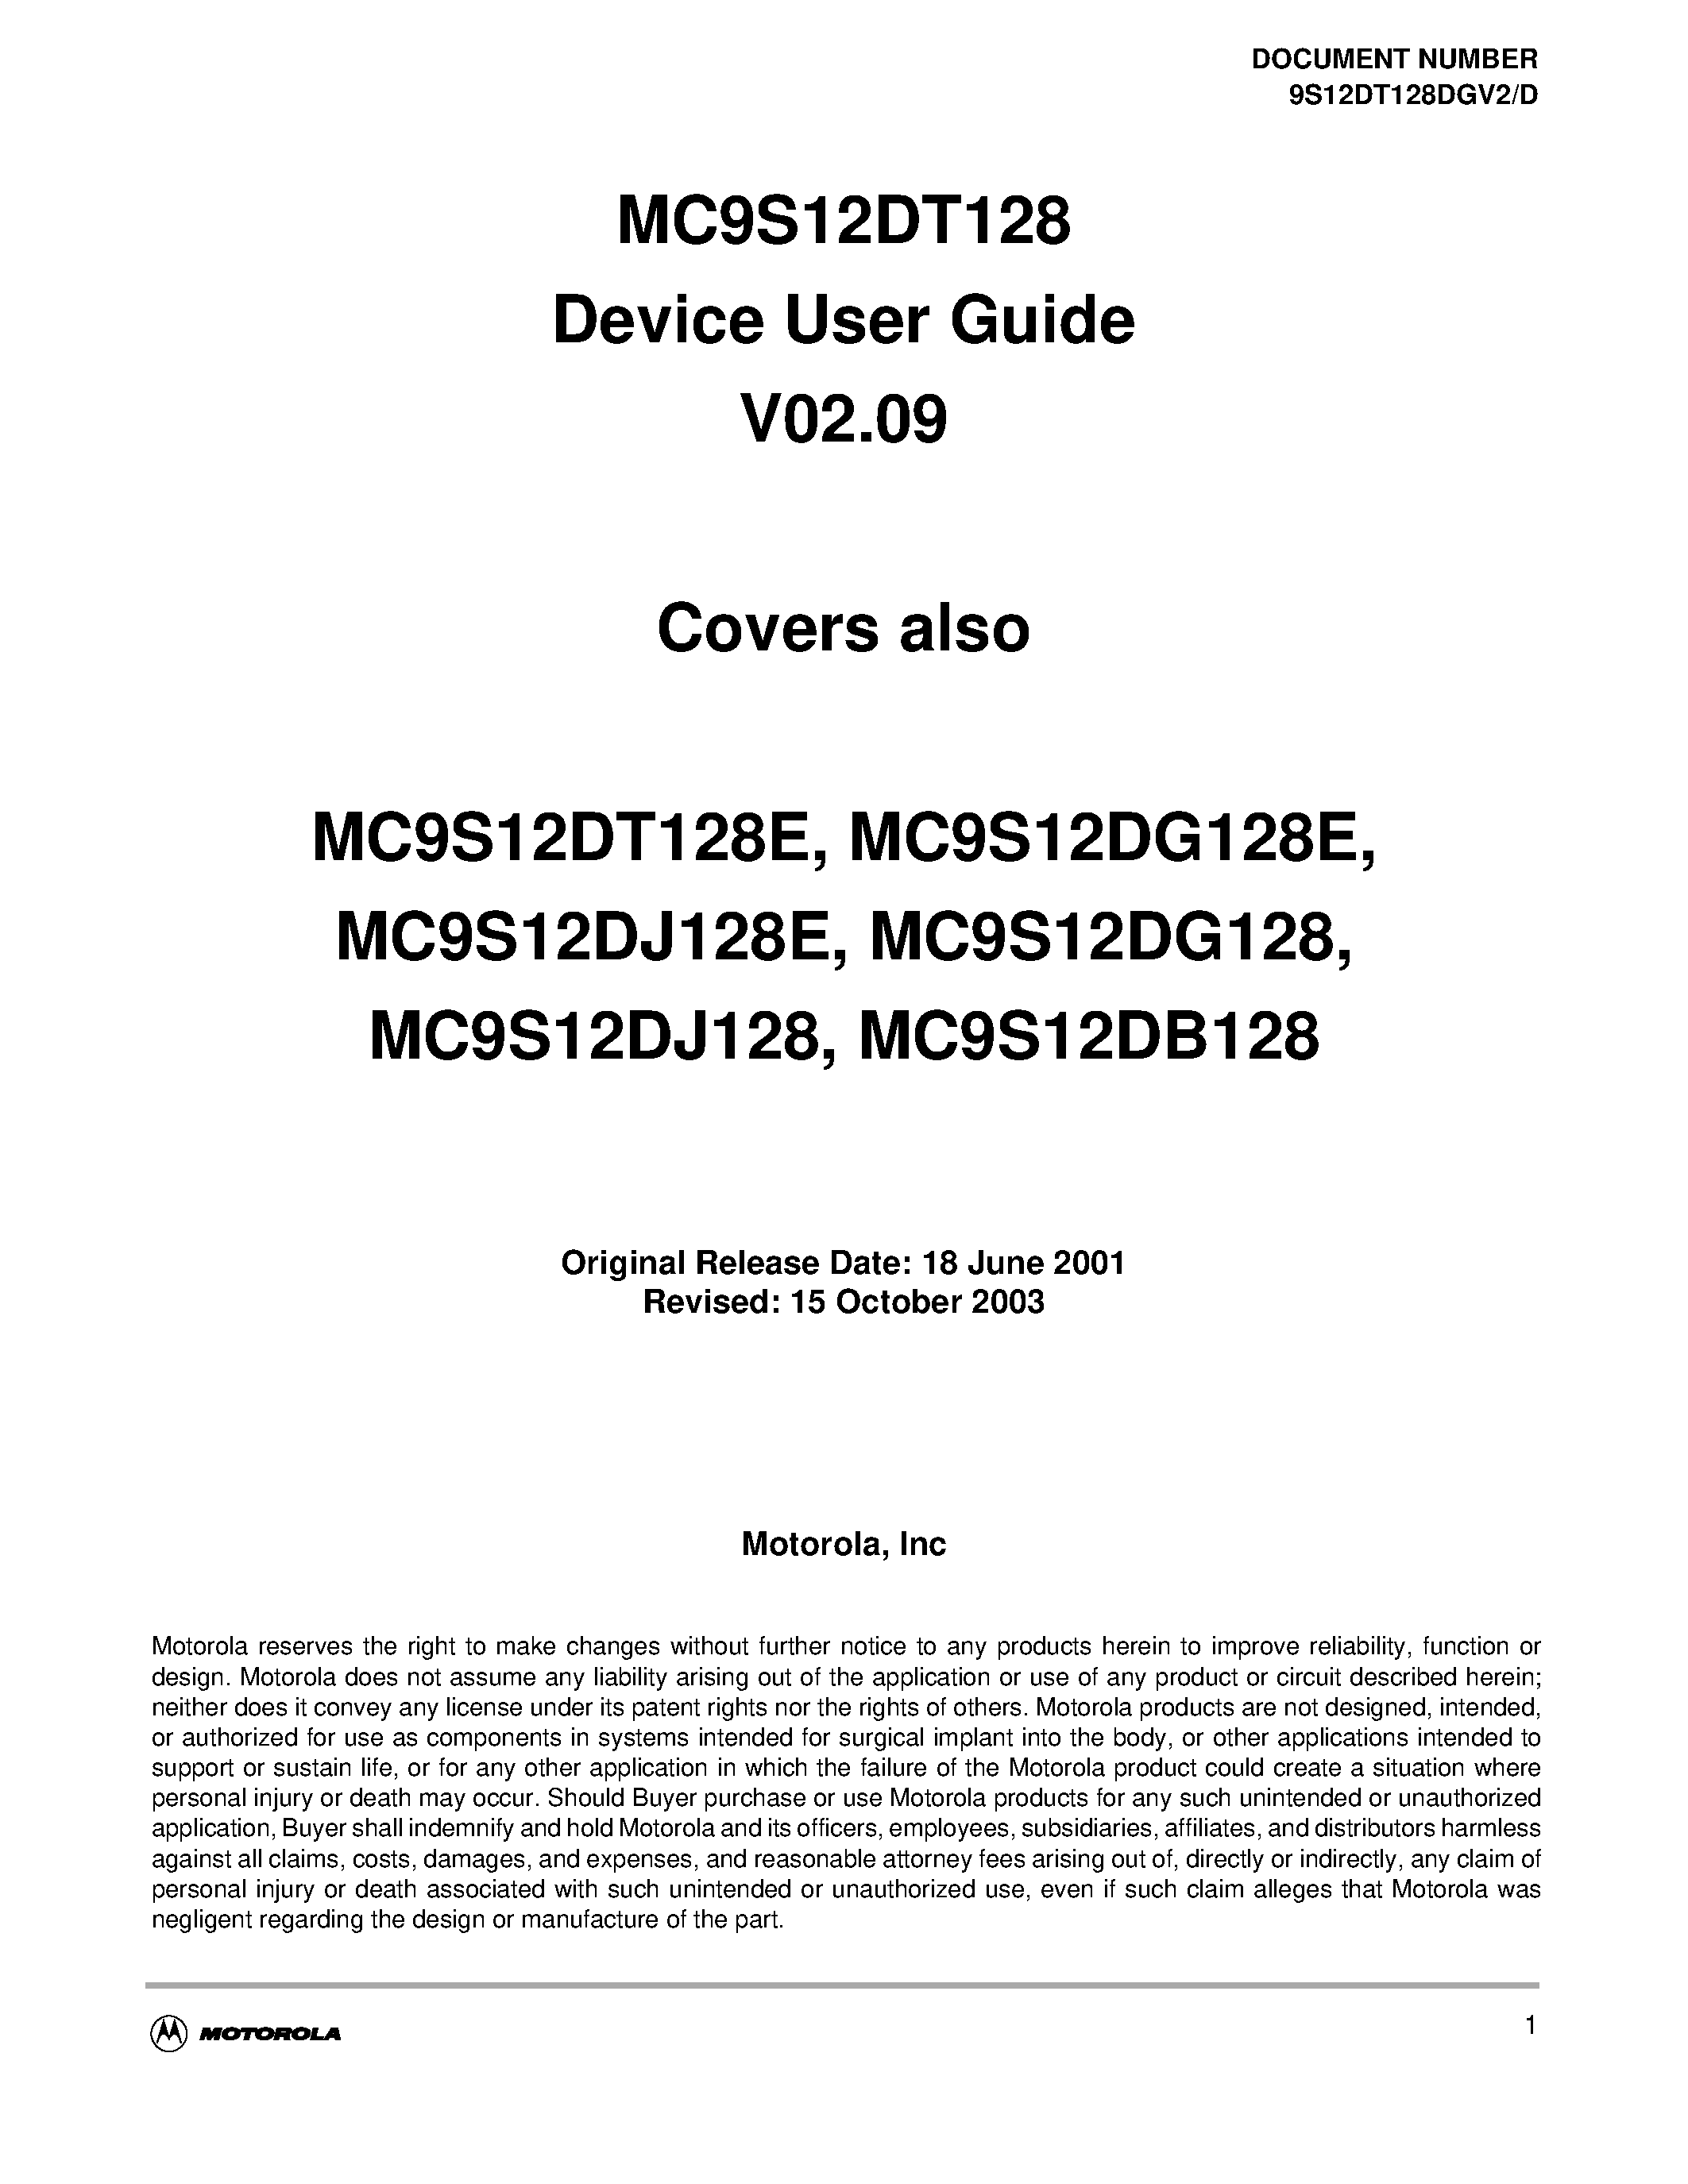 Даташит S12BKPV1 - MC9S12DT128 Device User Guide V02.09 страница 1